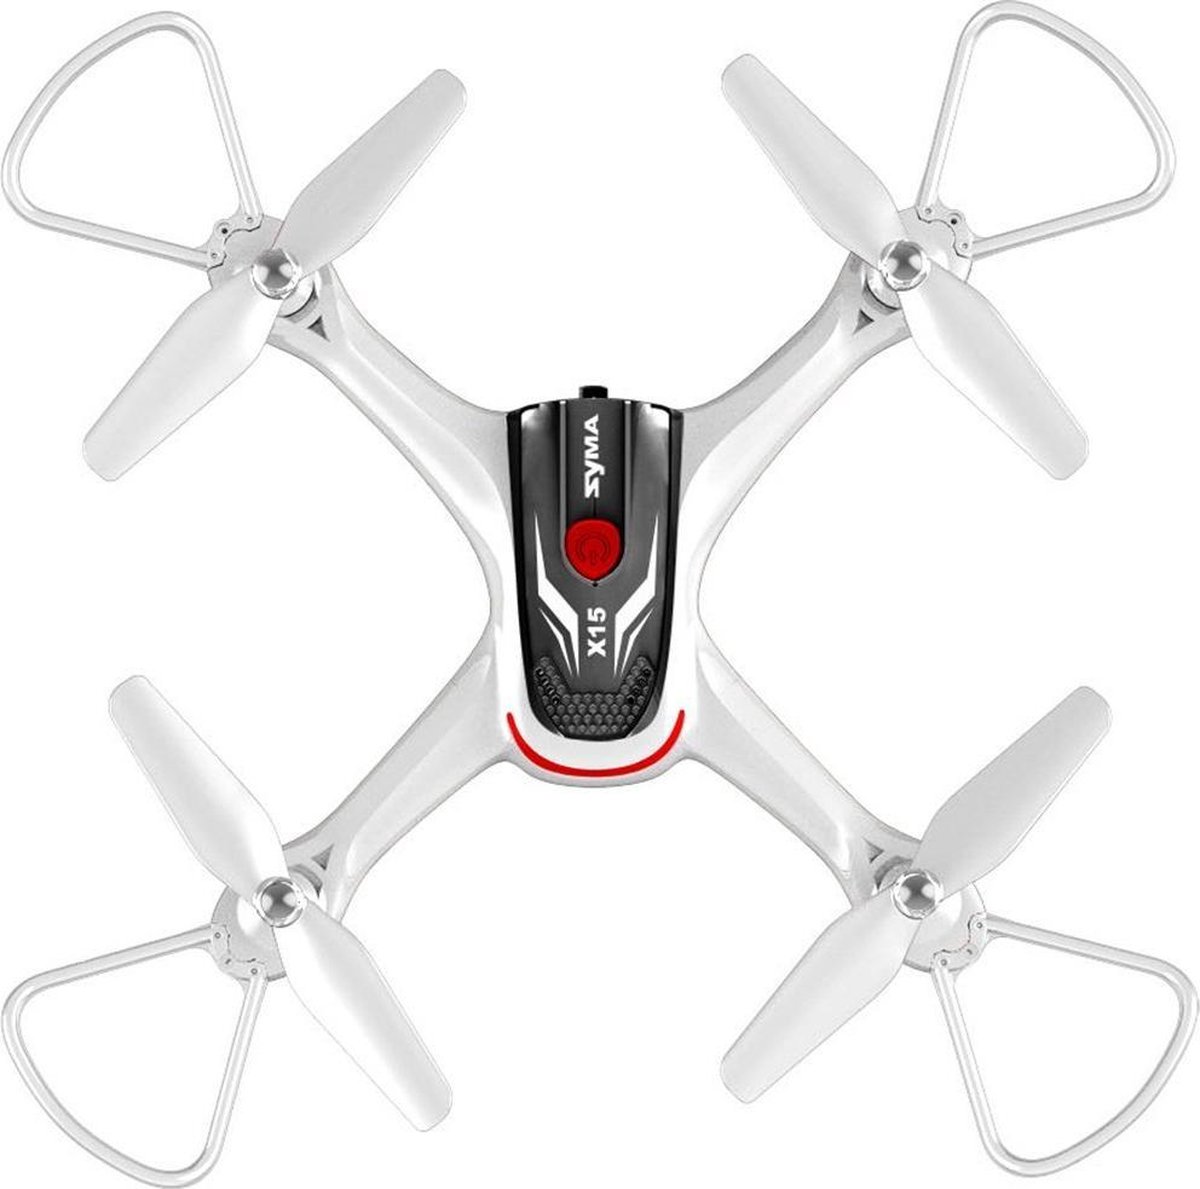 Syma X15 indoor/outdoor drone quadcopter 2.4Ghz - Wit | bol.com